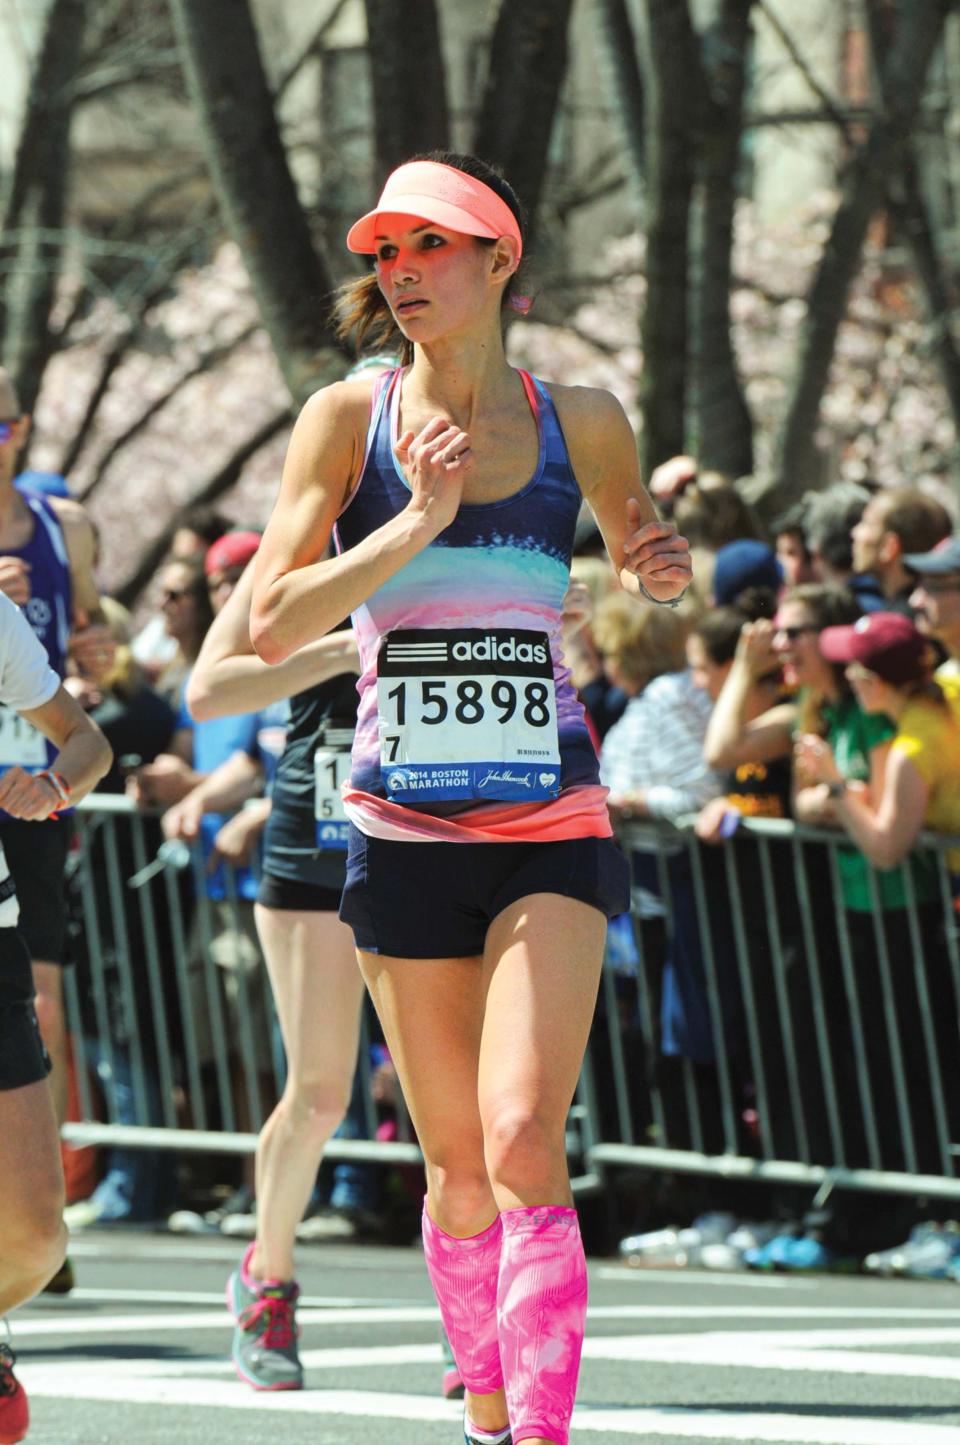 Michele Rosen unning in the 2014 Boston Marathon.